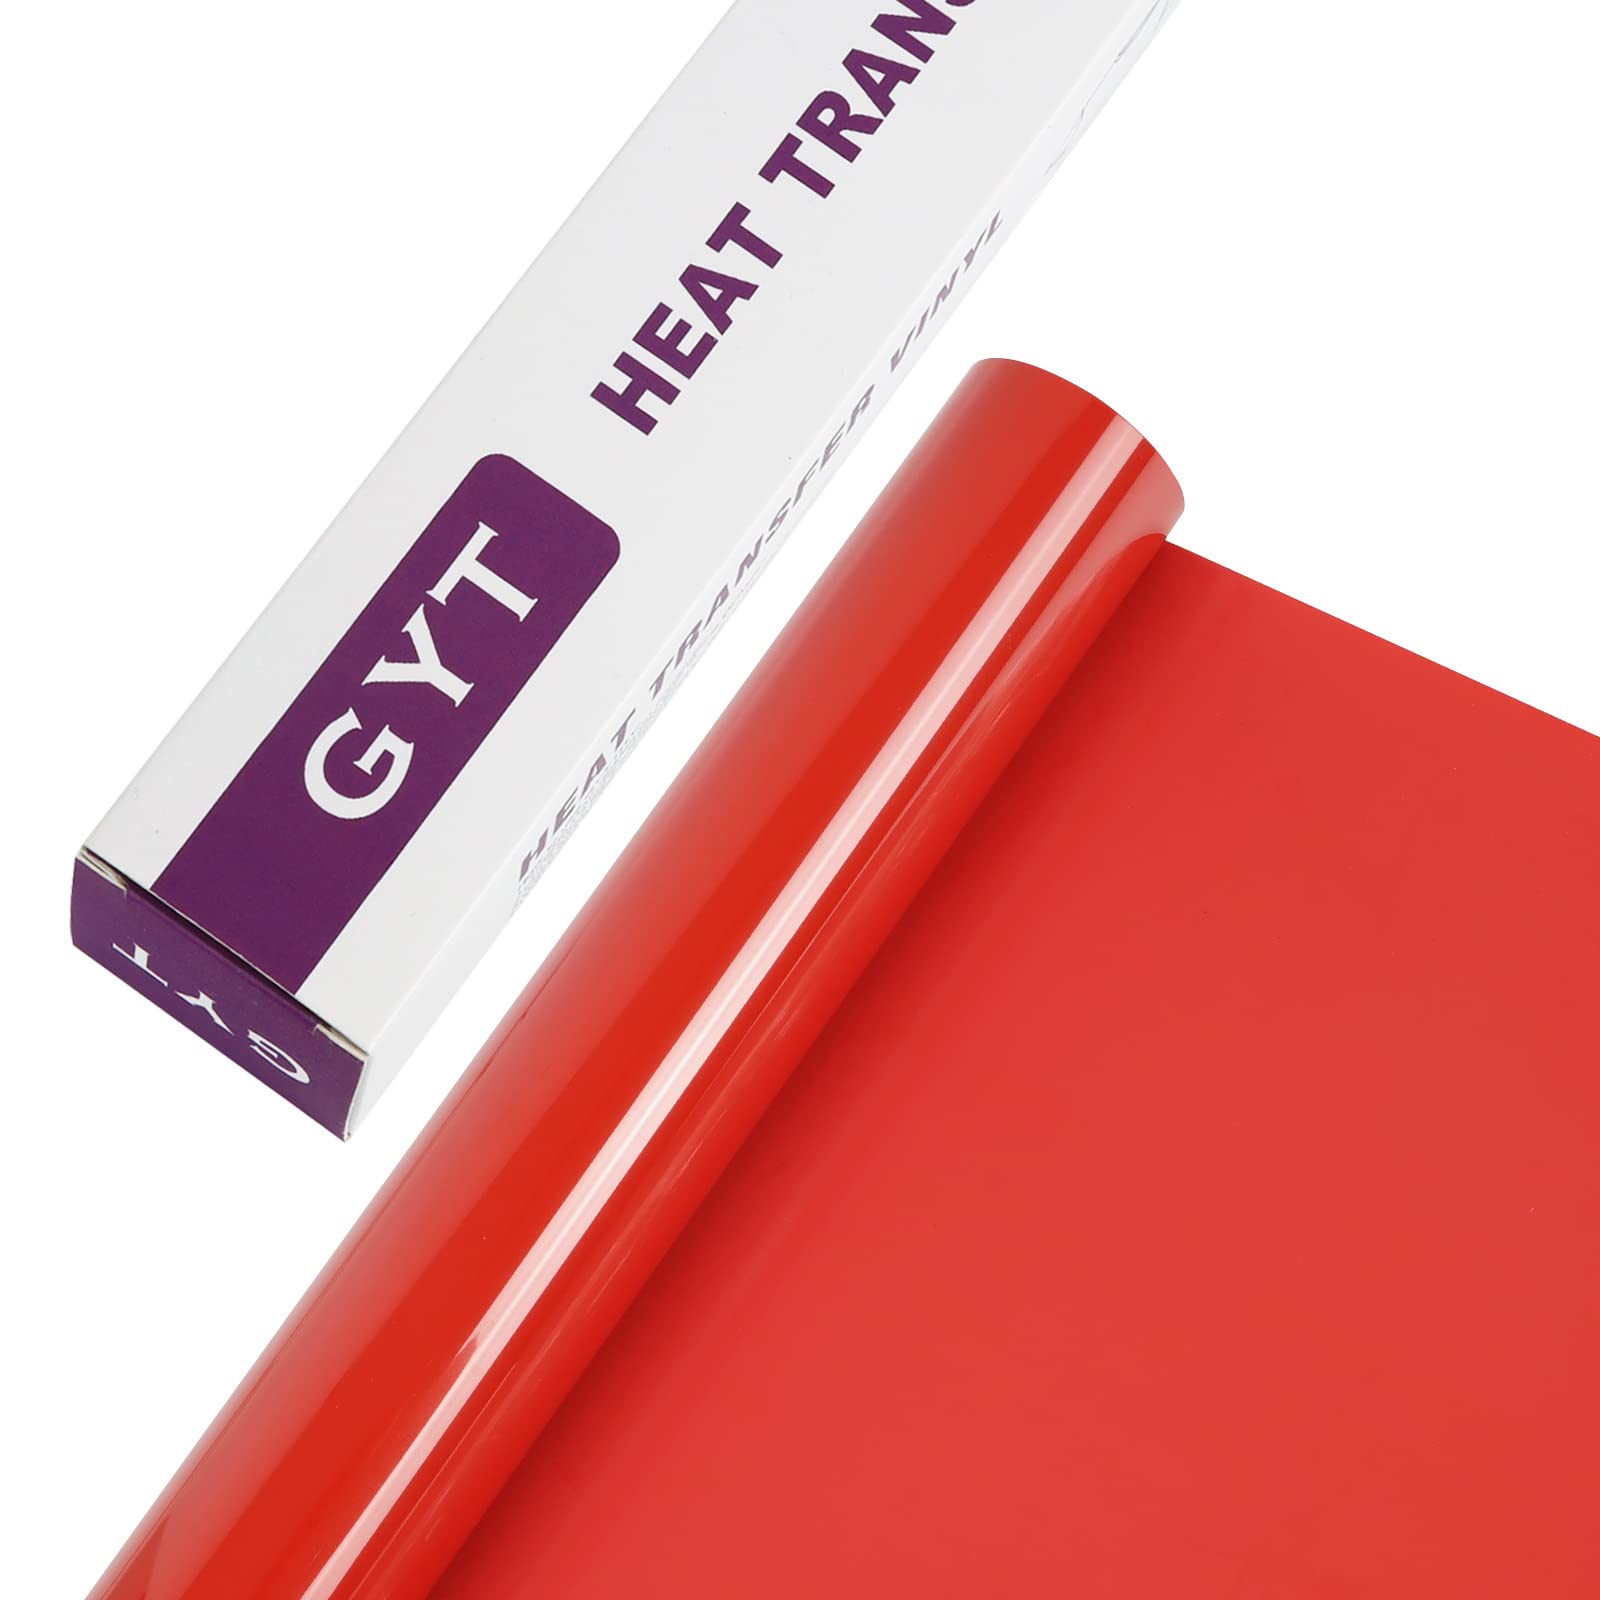 GYT Red Heat Transfer Vinyl Rolls - 12 Inch x 7 Feet Red HTV Vinyl